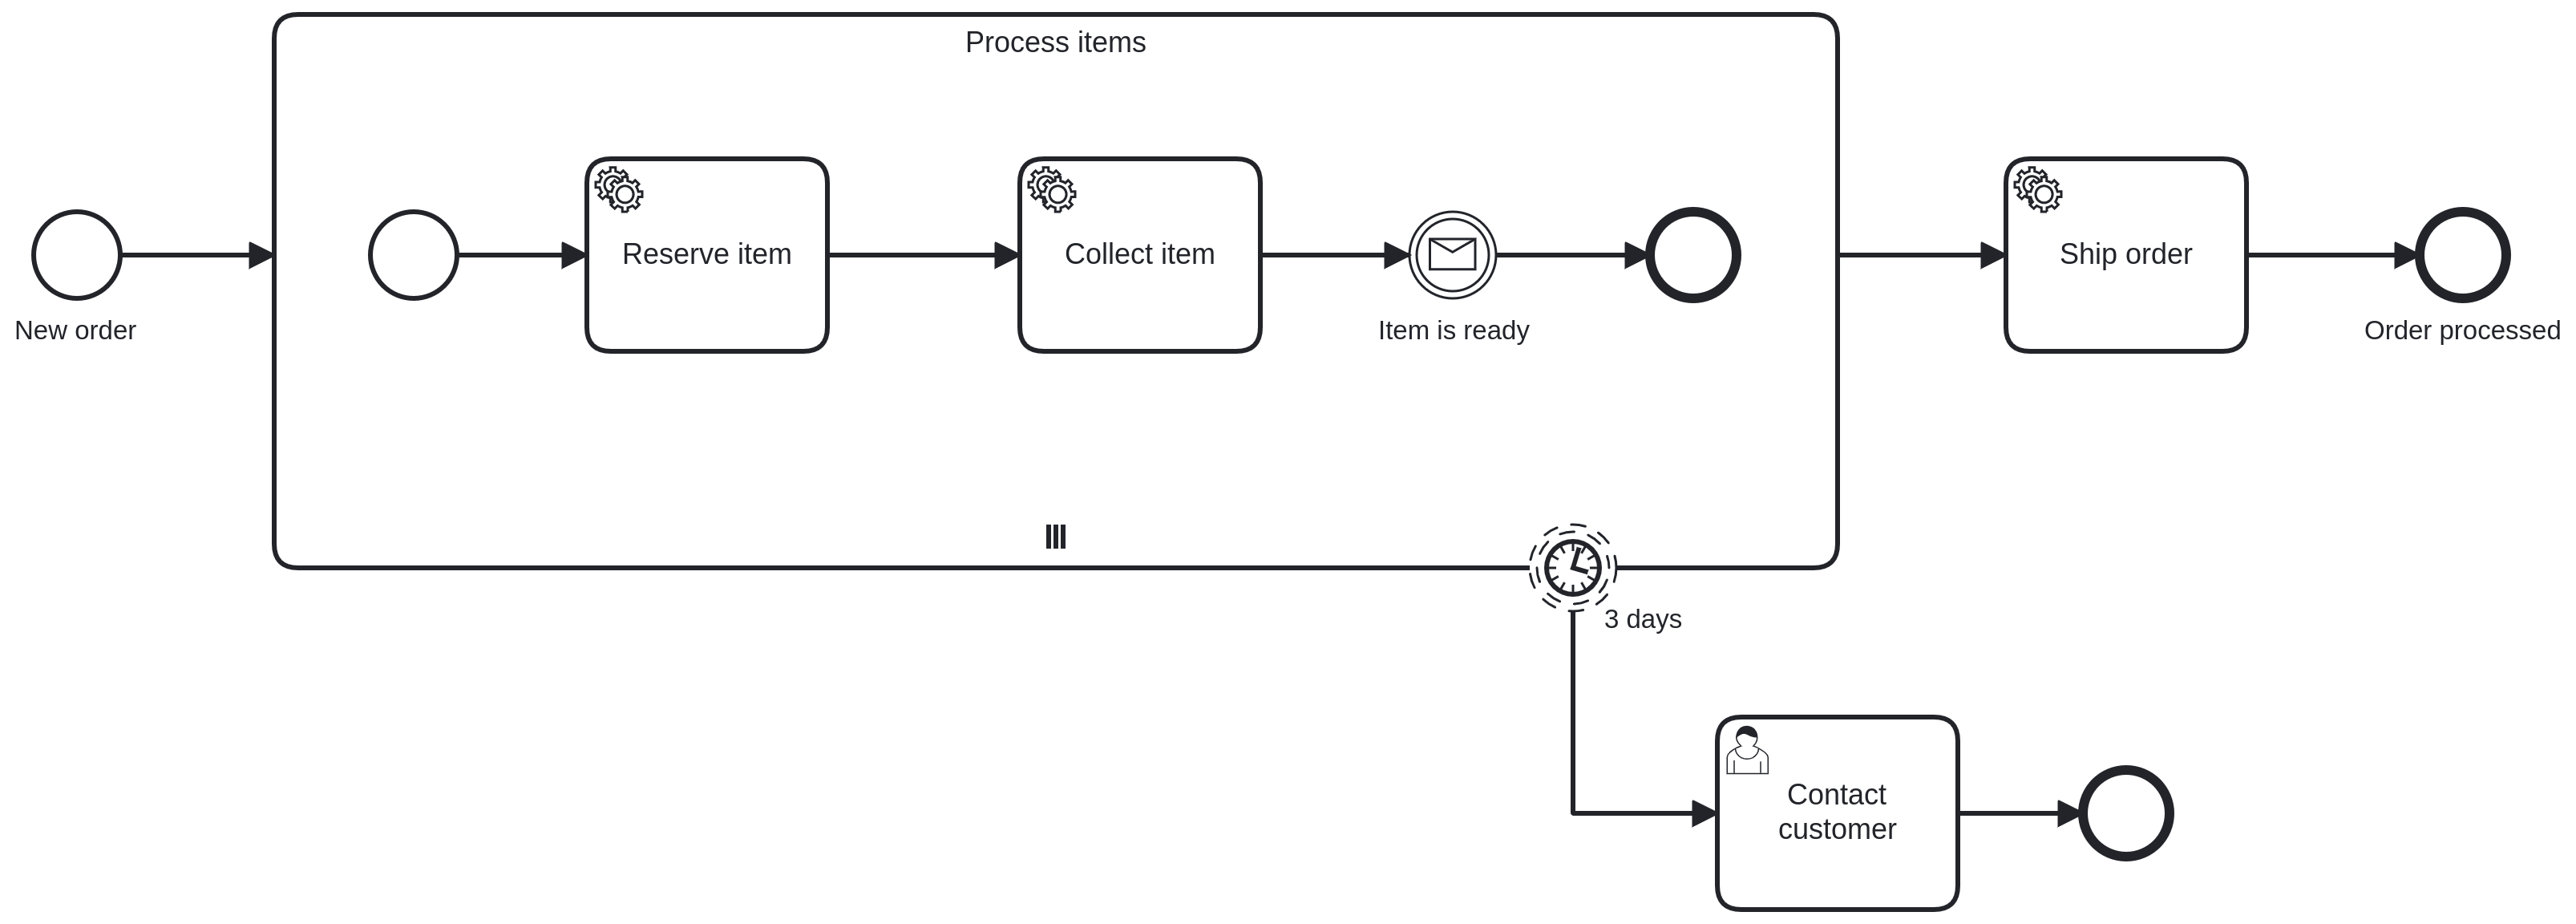 order-process